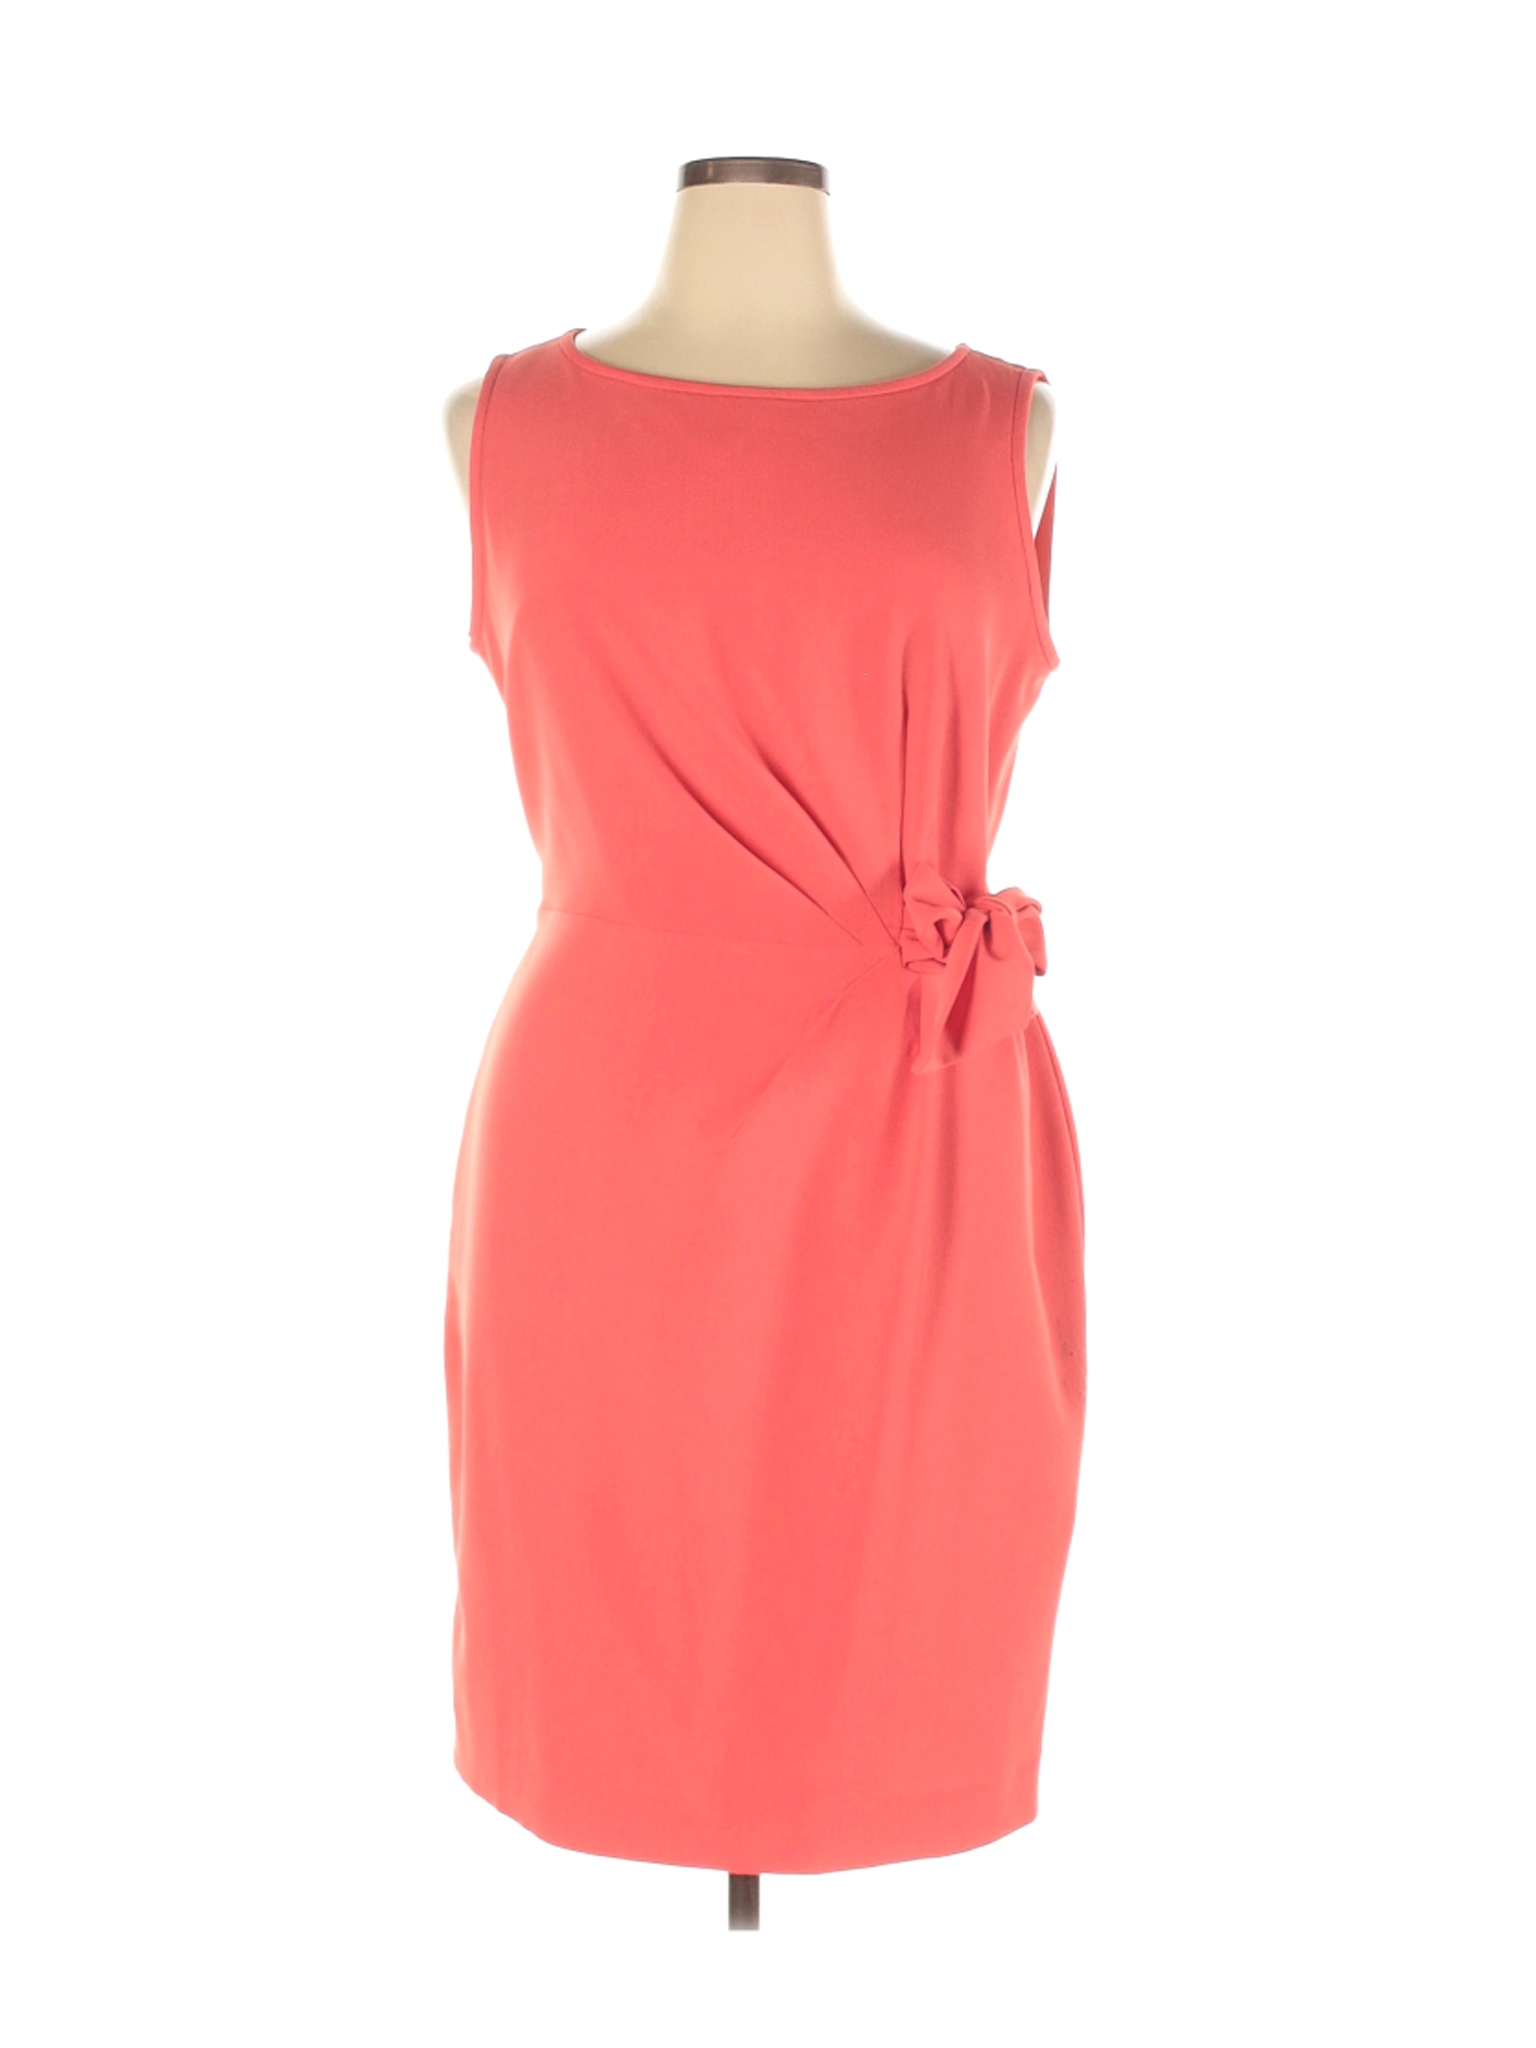 Anne Klein Women Pink Casual Dress 16 | eBay